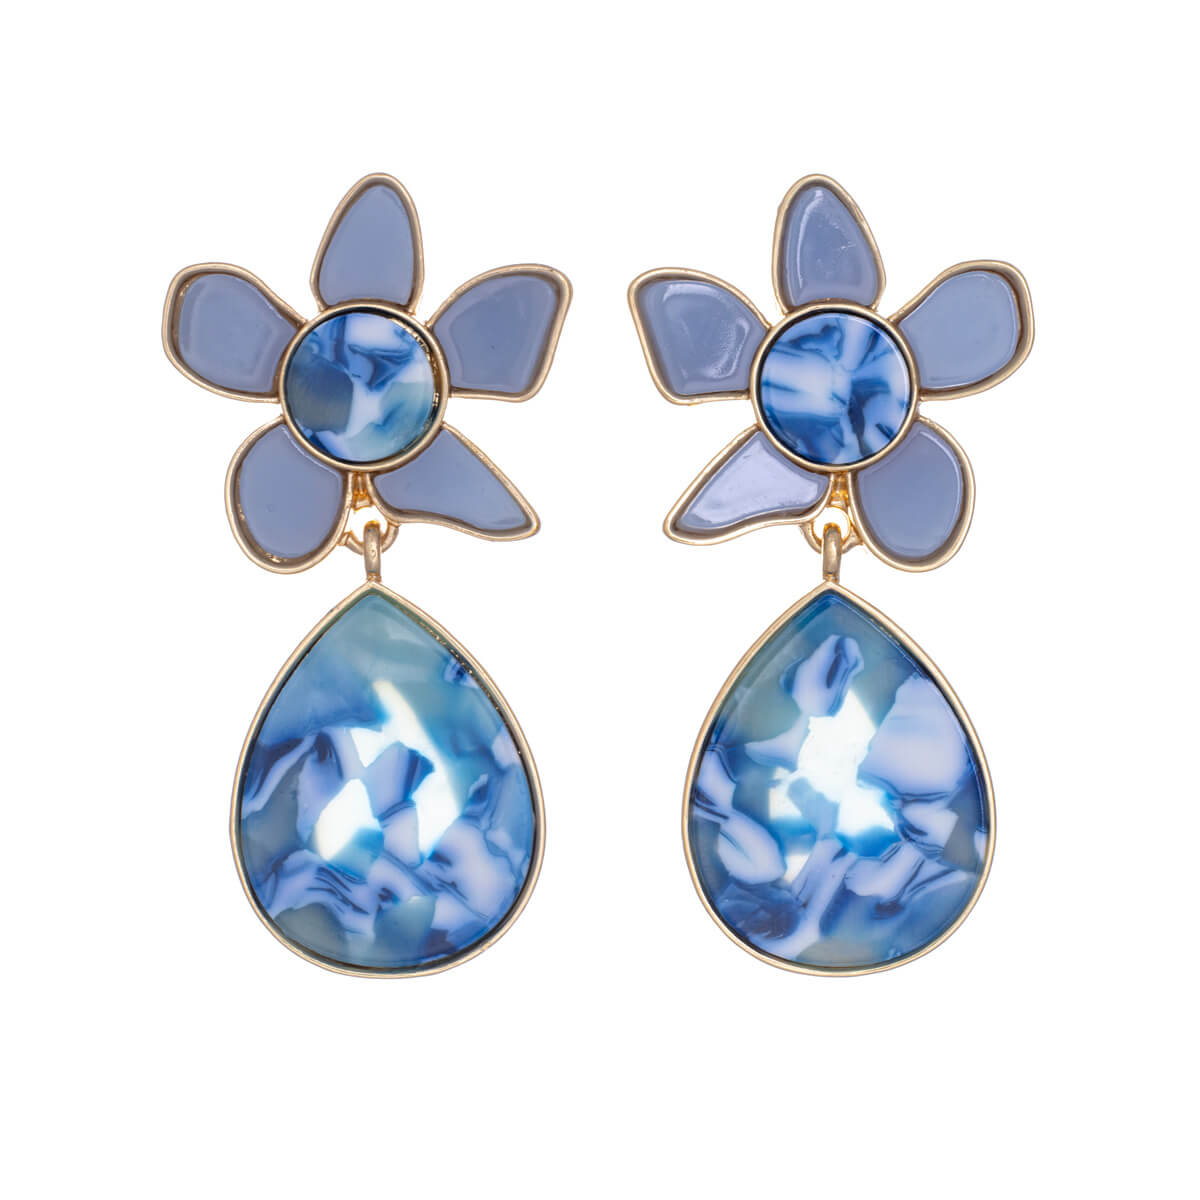 Patterned flower earrings with drop pendant